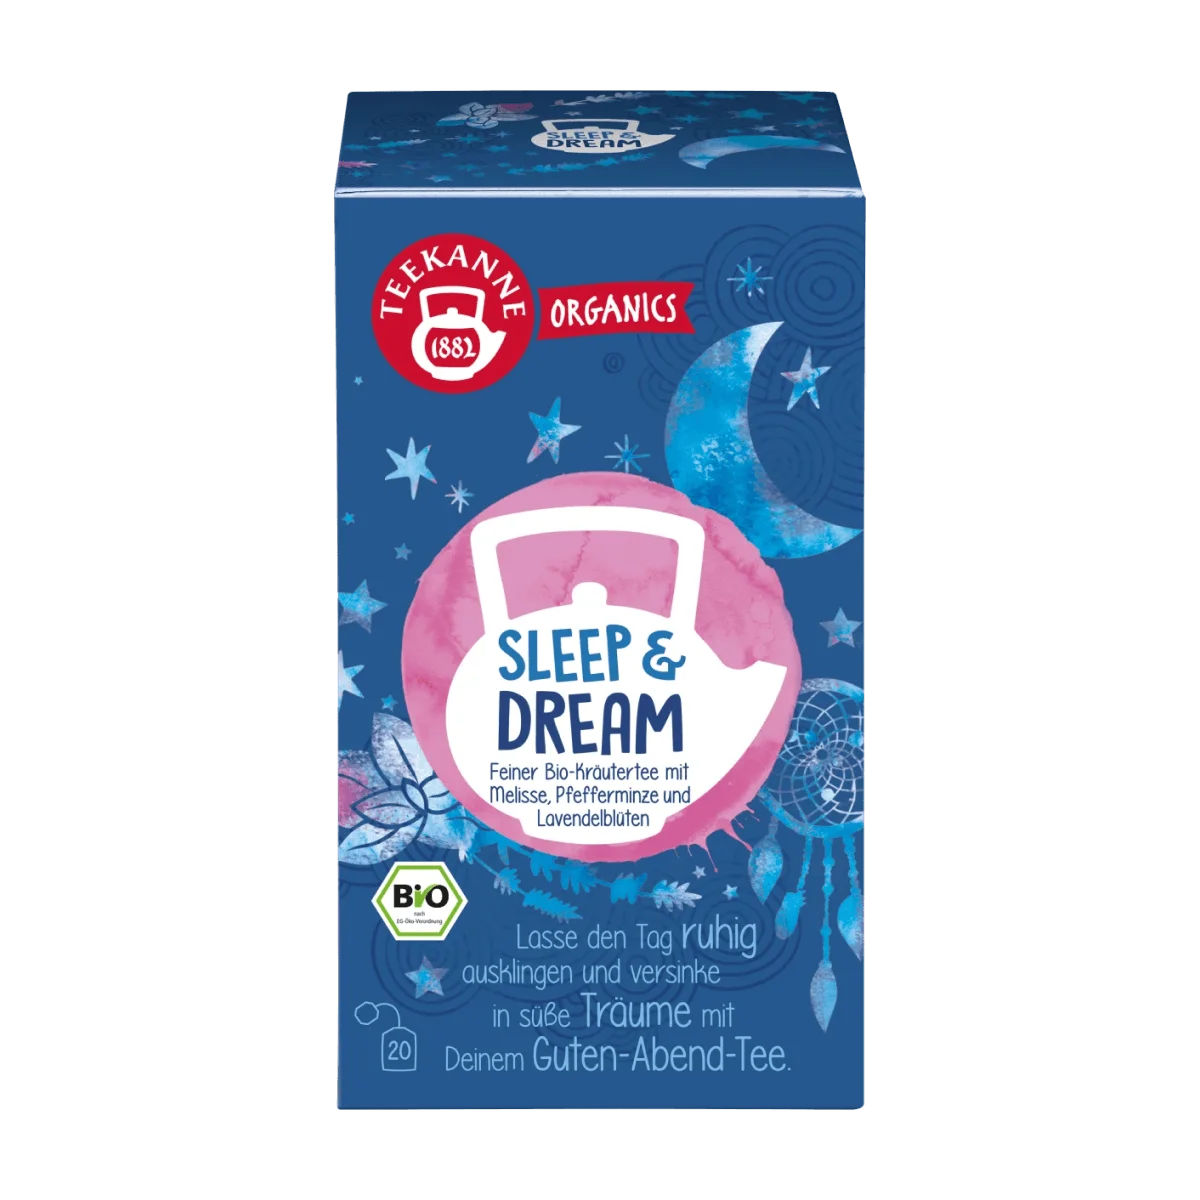 Teekanne Kräutertee sleep & dream mit Melisse, Pfefferminze, Lavendelblüten (20 Beutel), 34 g